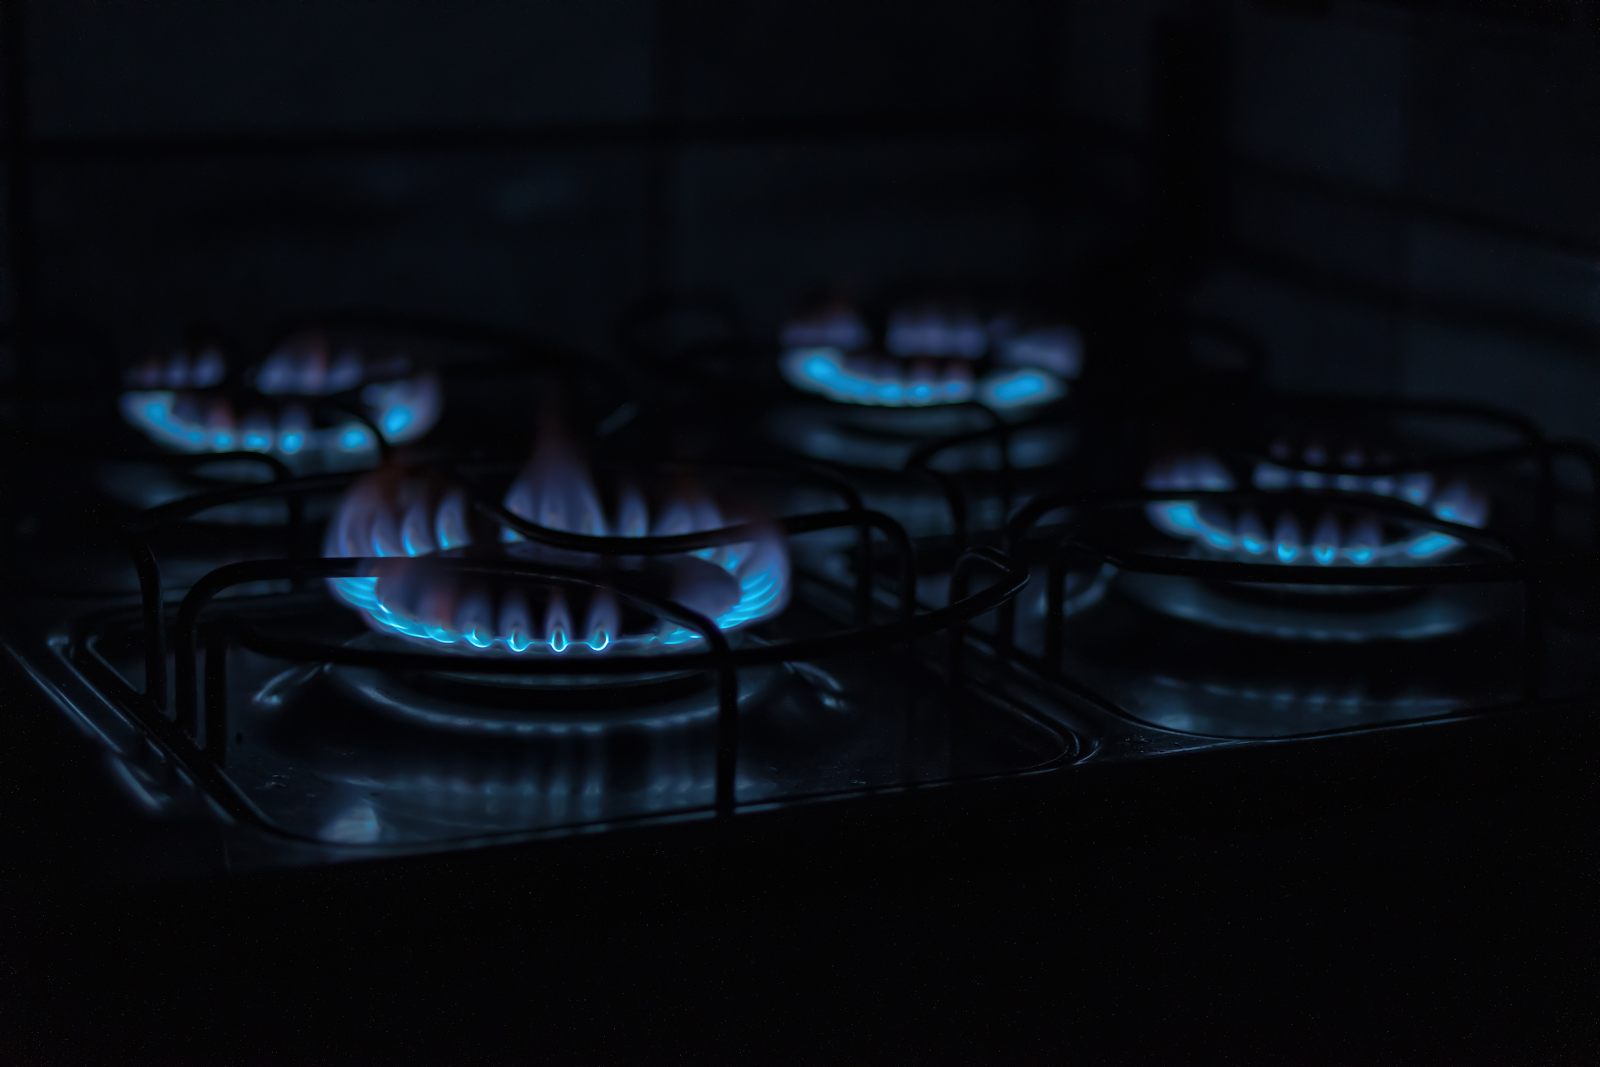 Propane stove buring propane